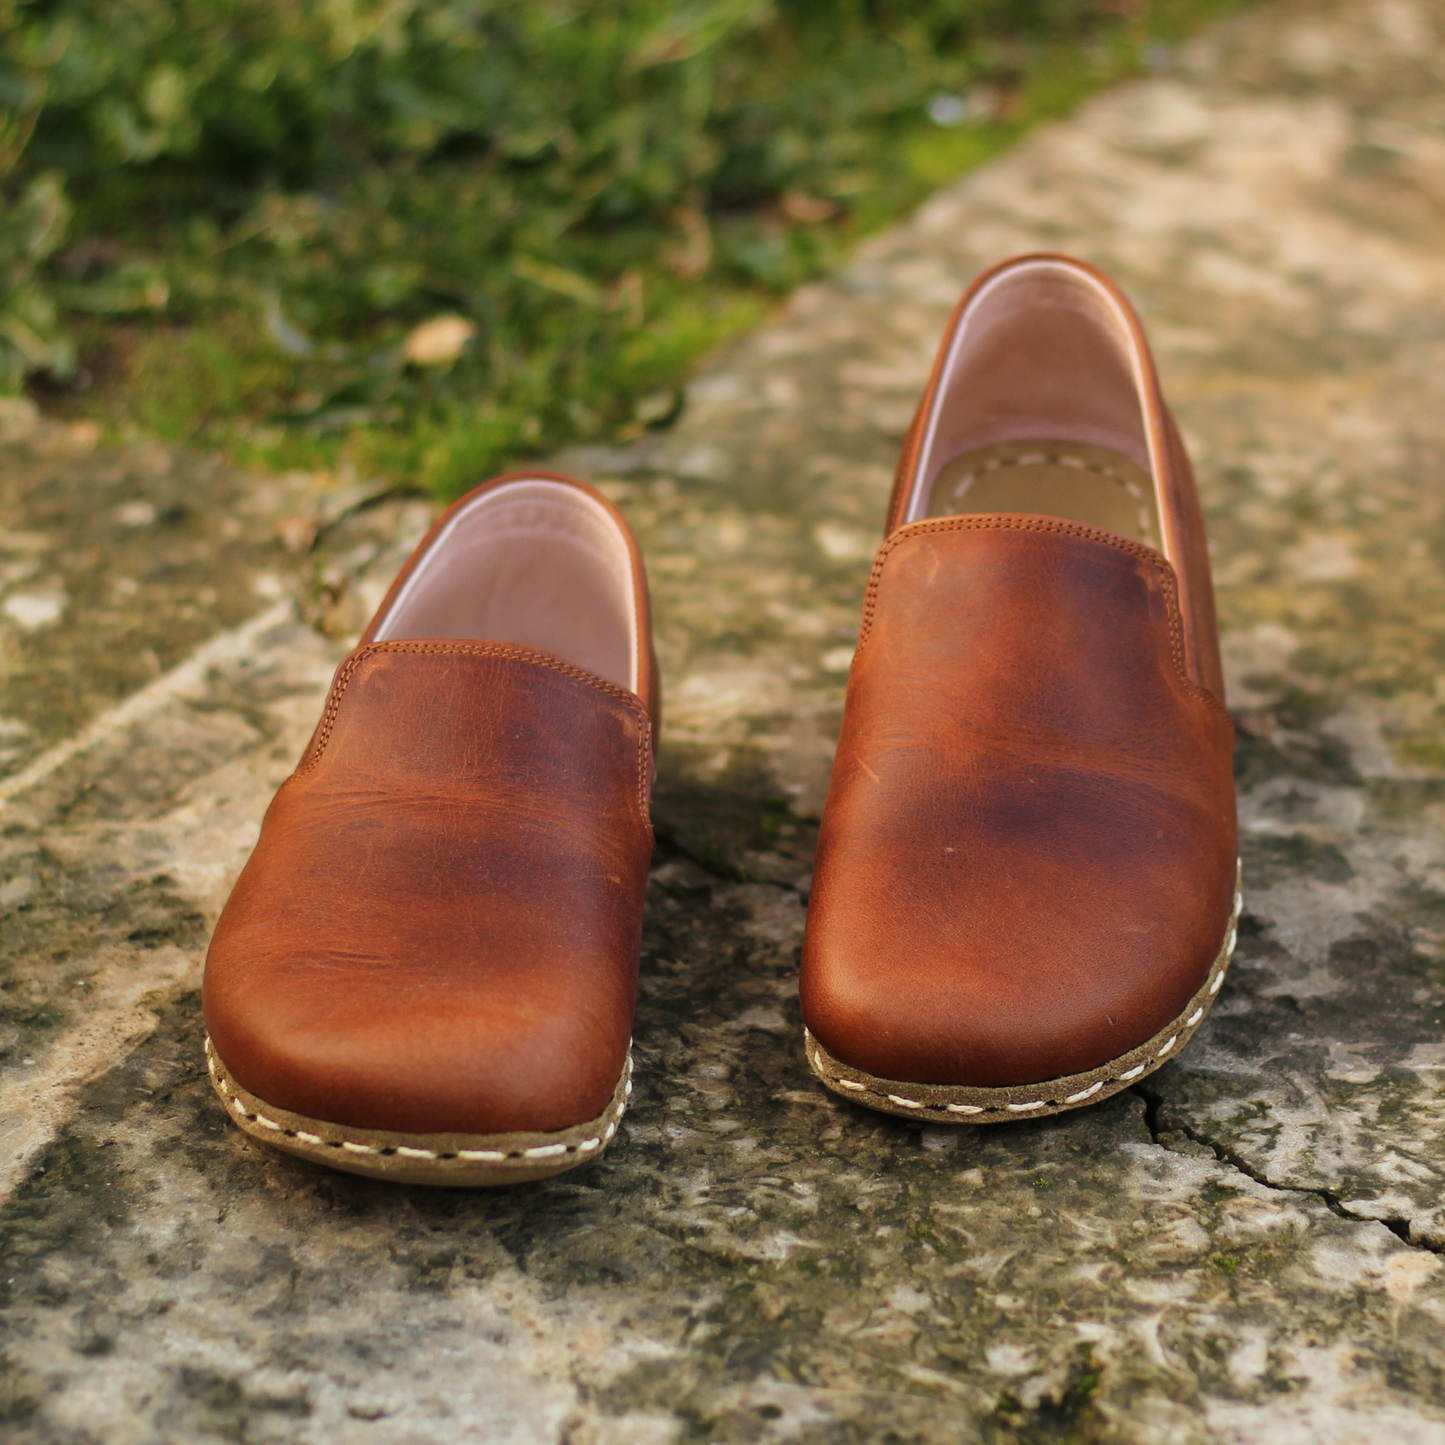 Men's Barefoot Loafers in New Crazy Brown - Zero Drop & Handmade Leather